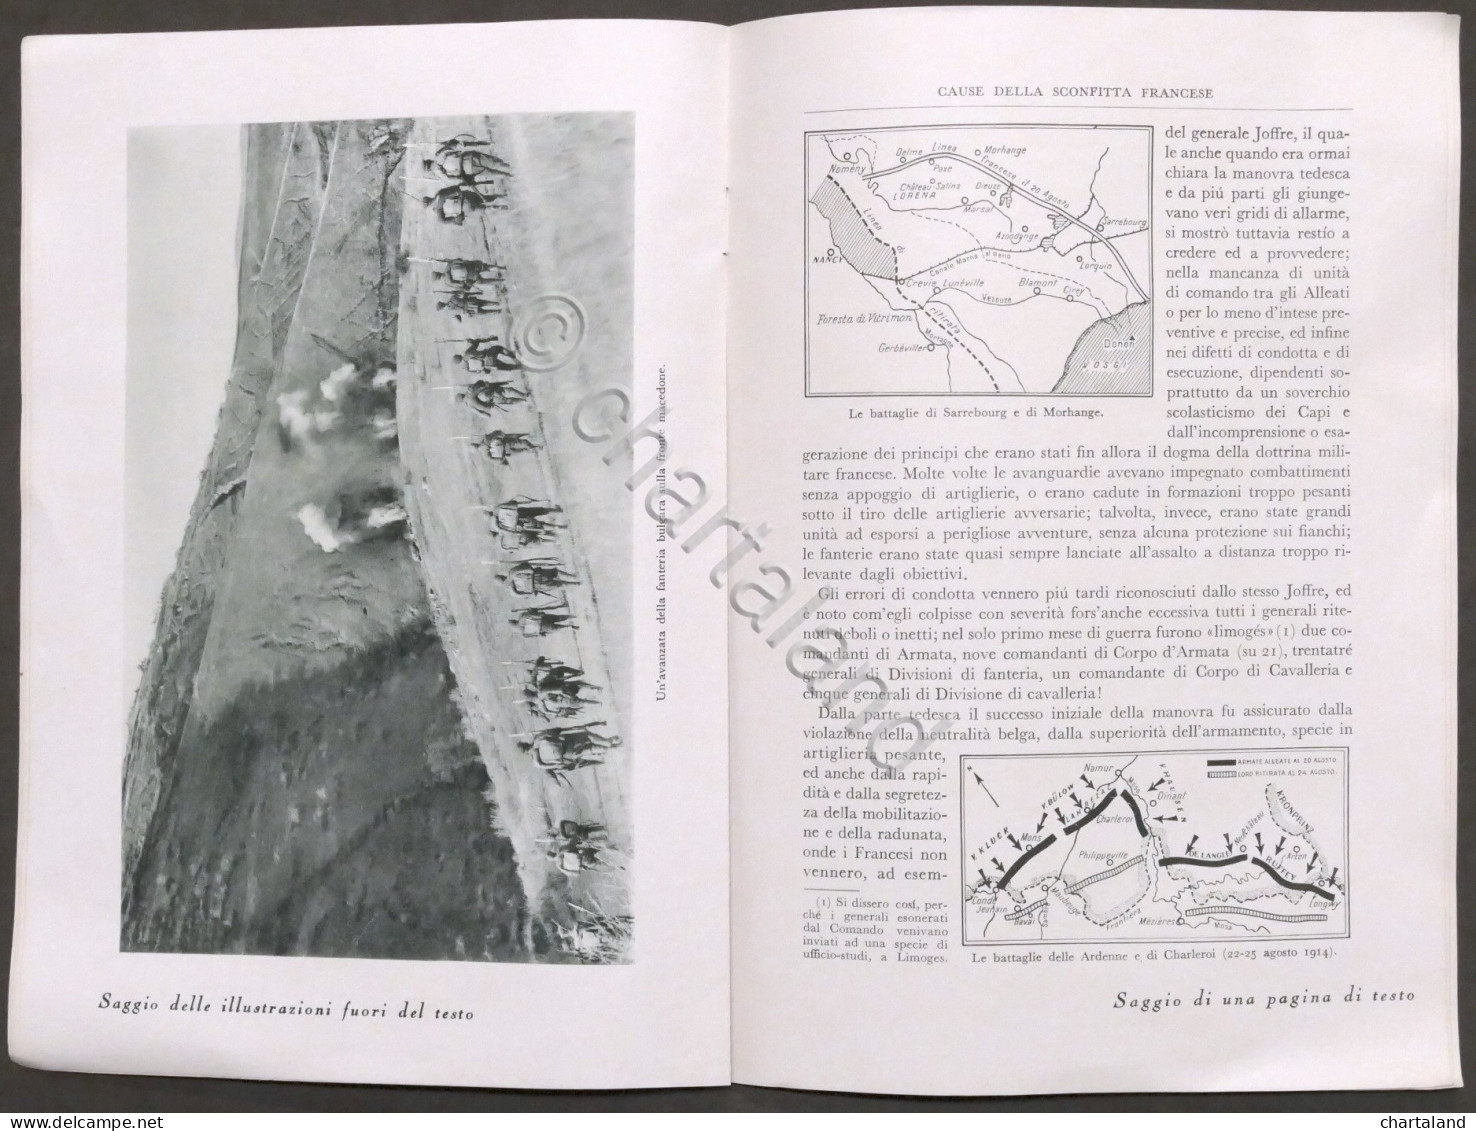 Brochure Mondadori A. Tosti - Storia Della Guerra Mondiale 1914-1918 - Ed. 1937 - Werbung